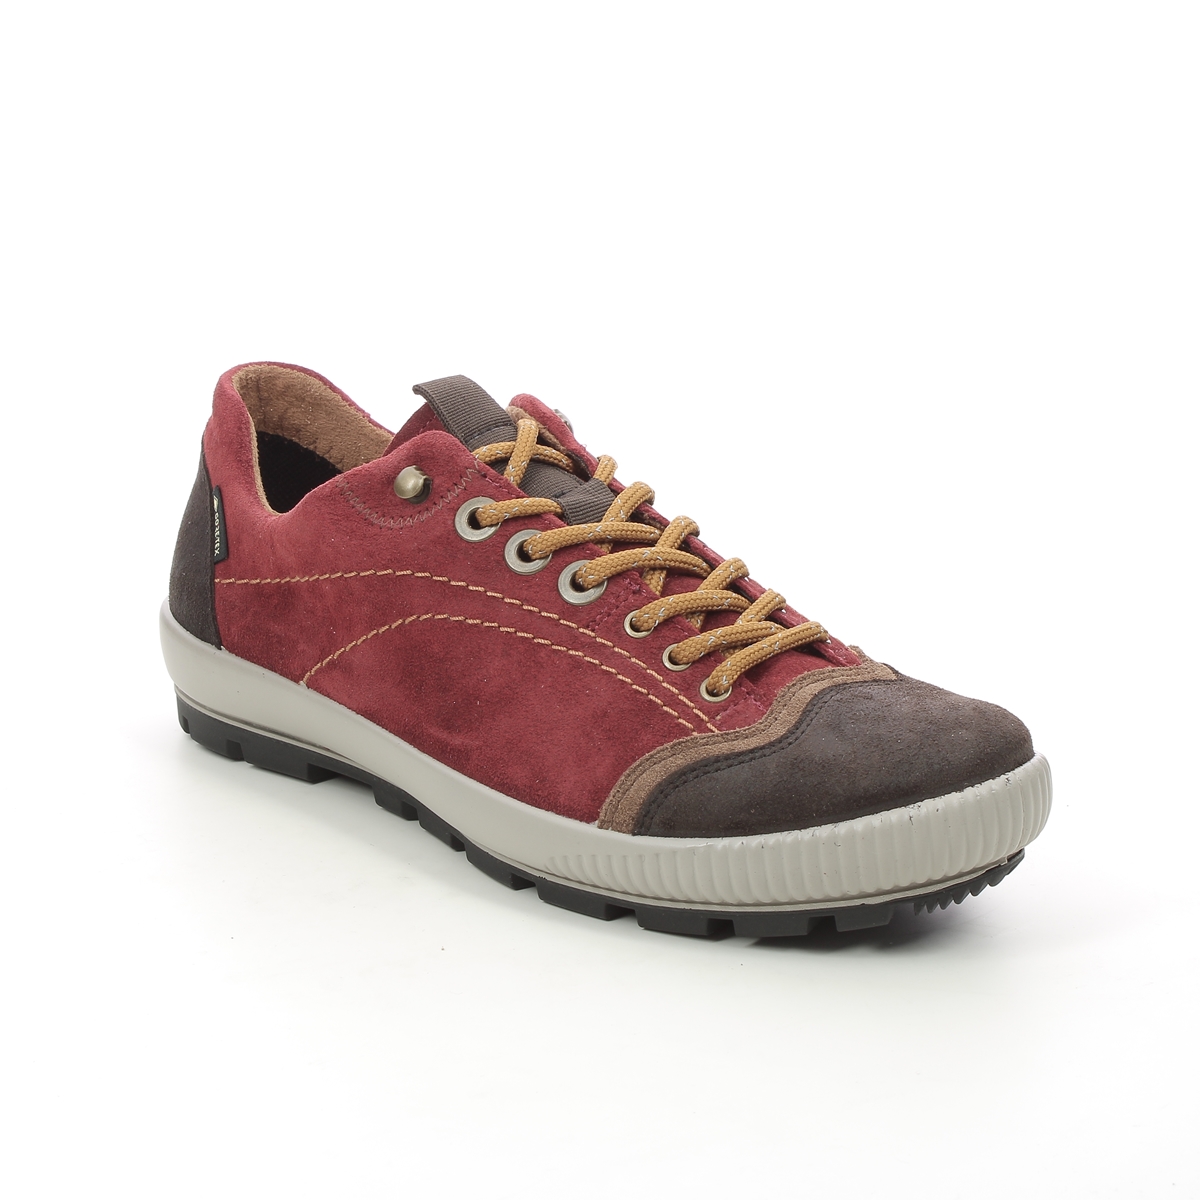 Legero Tanaro Trek Gtx Red suede Womens Walking Shoes 2000122-5100 in a Plain Leather in Size 6